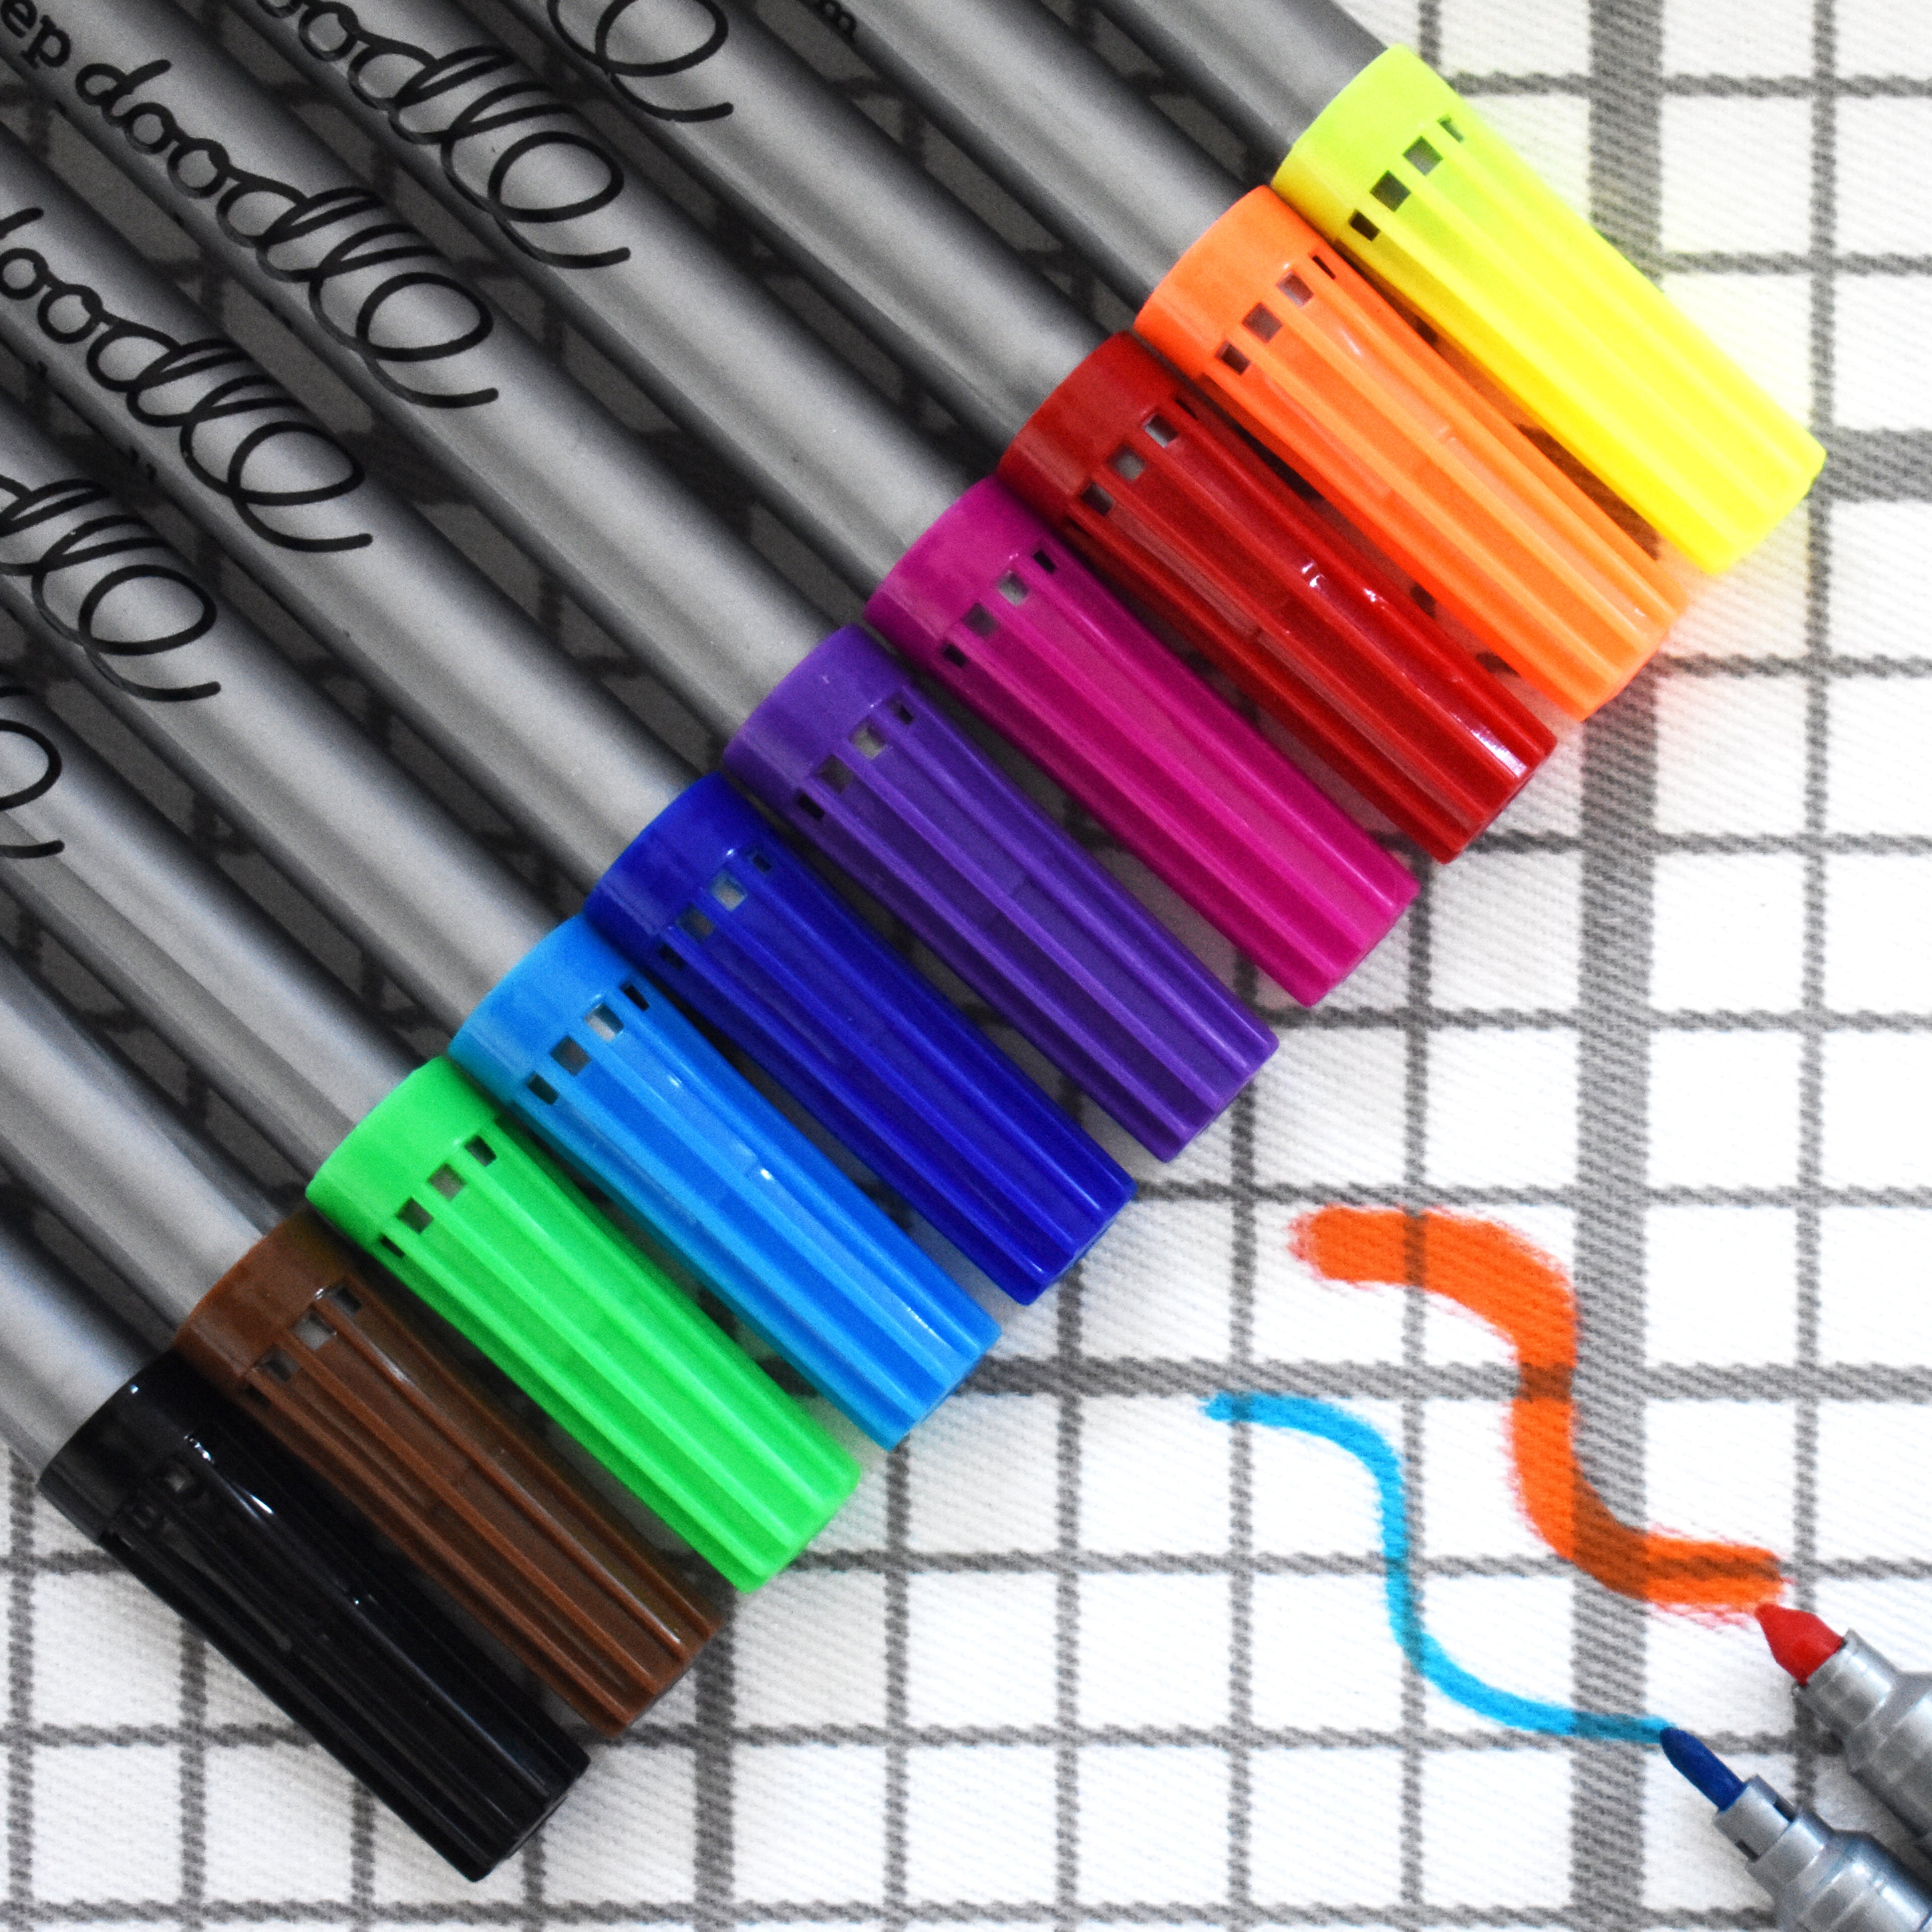 doodle wash-out marker set of 10 – eatsleepdoodle (USA)